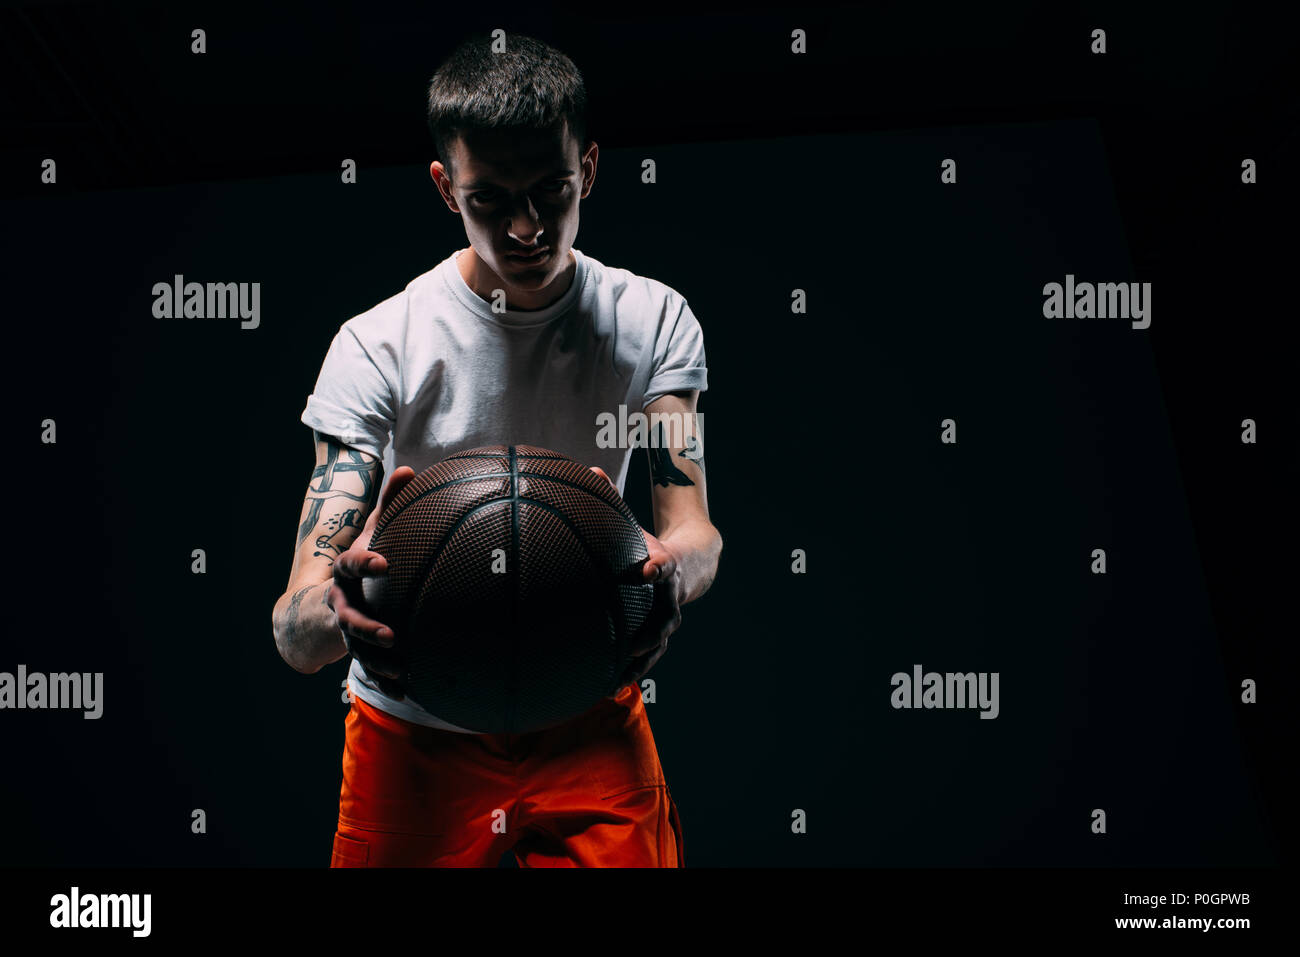 Man in prison uniform holding basketball ball on dark background Stock Photo